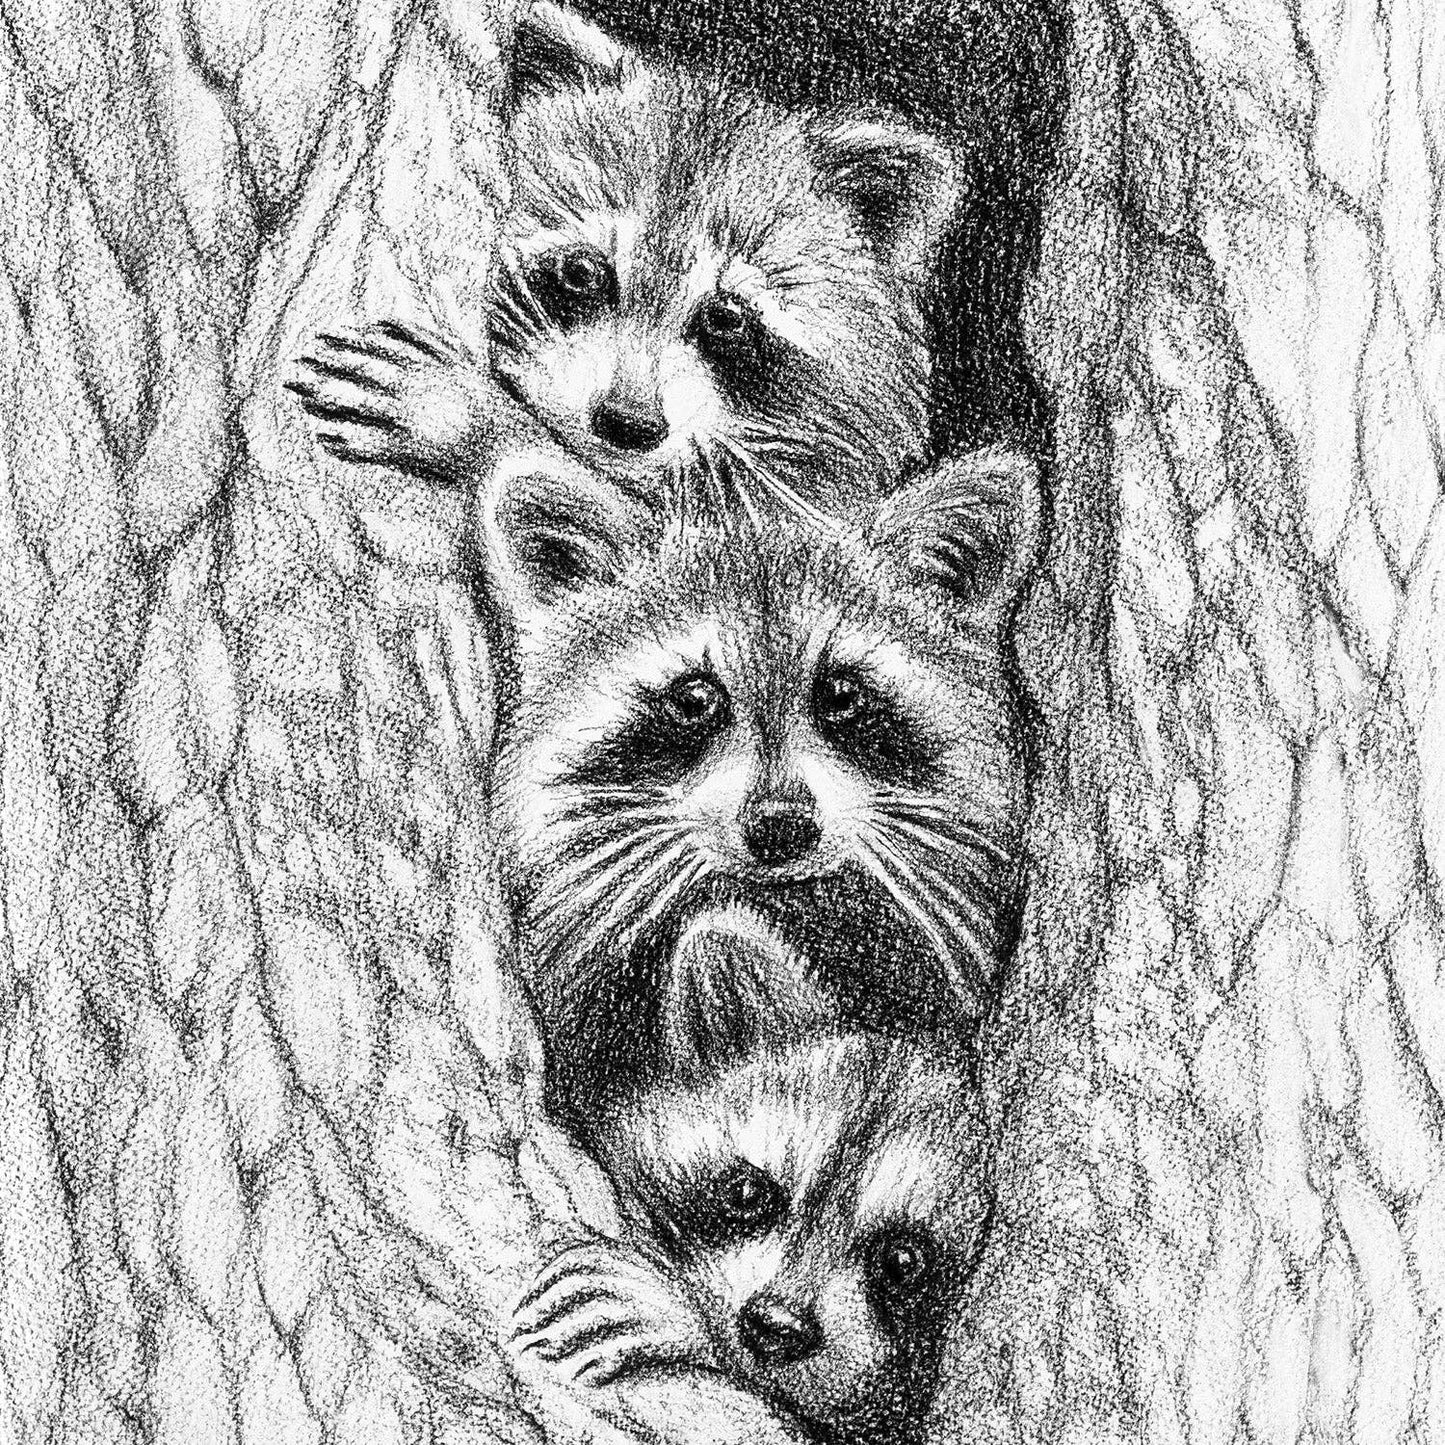 3 Raccoon in a tree - greeting card